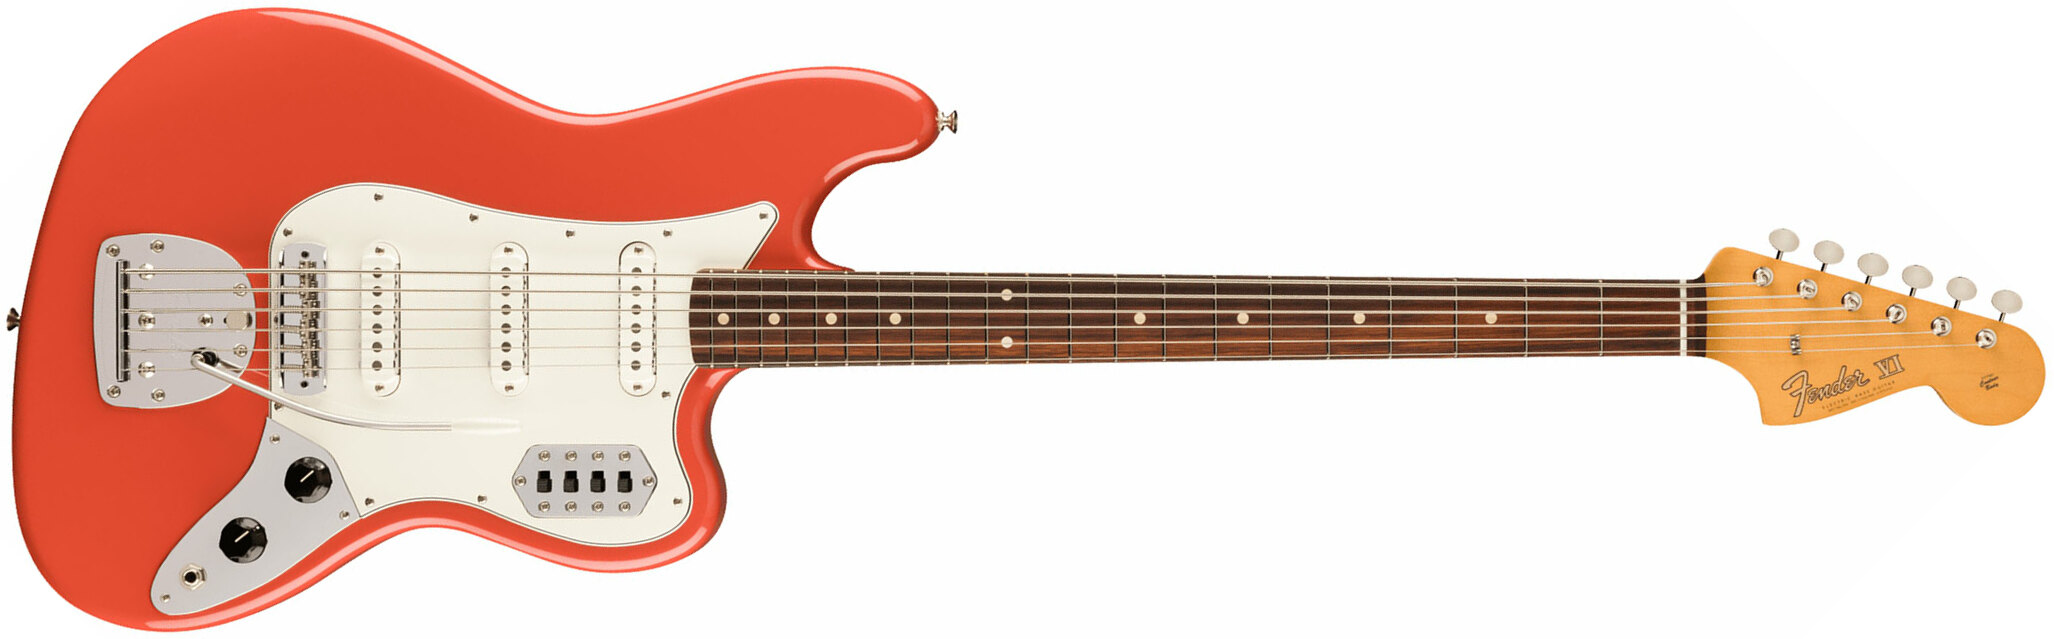 Fender 60s Bass Vi Vintera 2 3s Trem Rw - Fiesta Red - Baritone guitar - Main picture